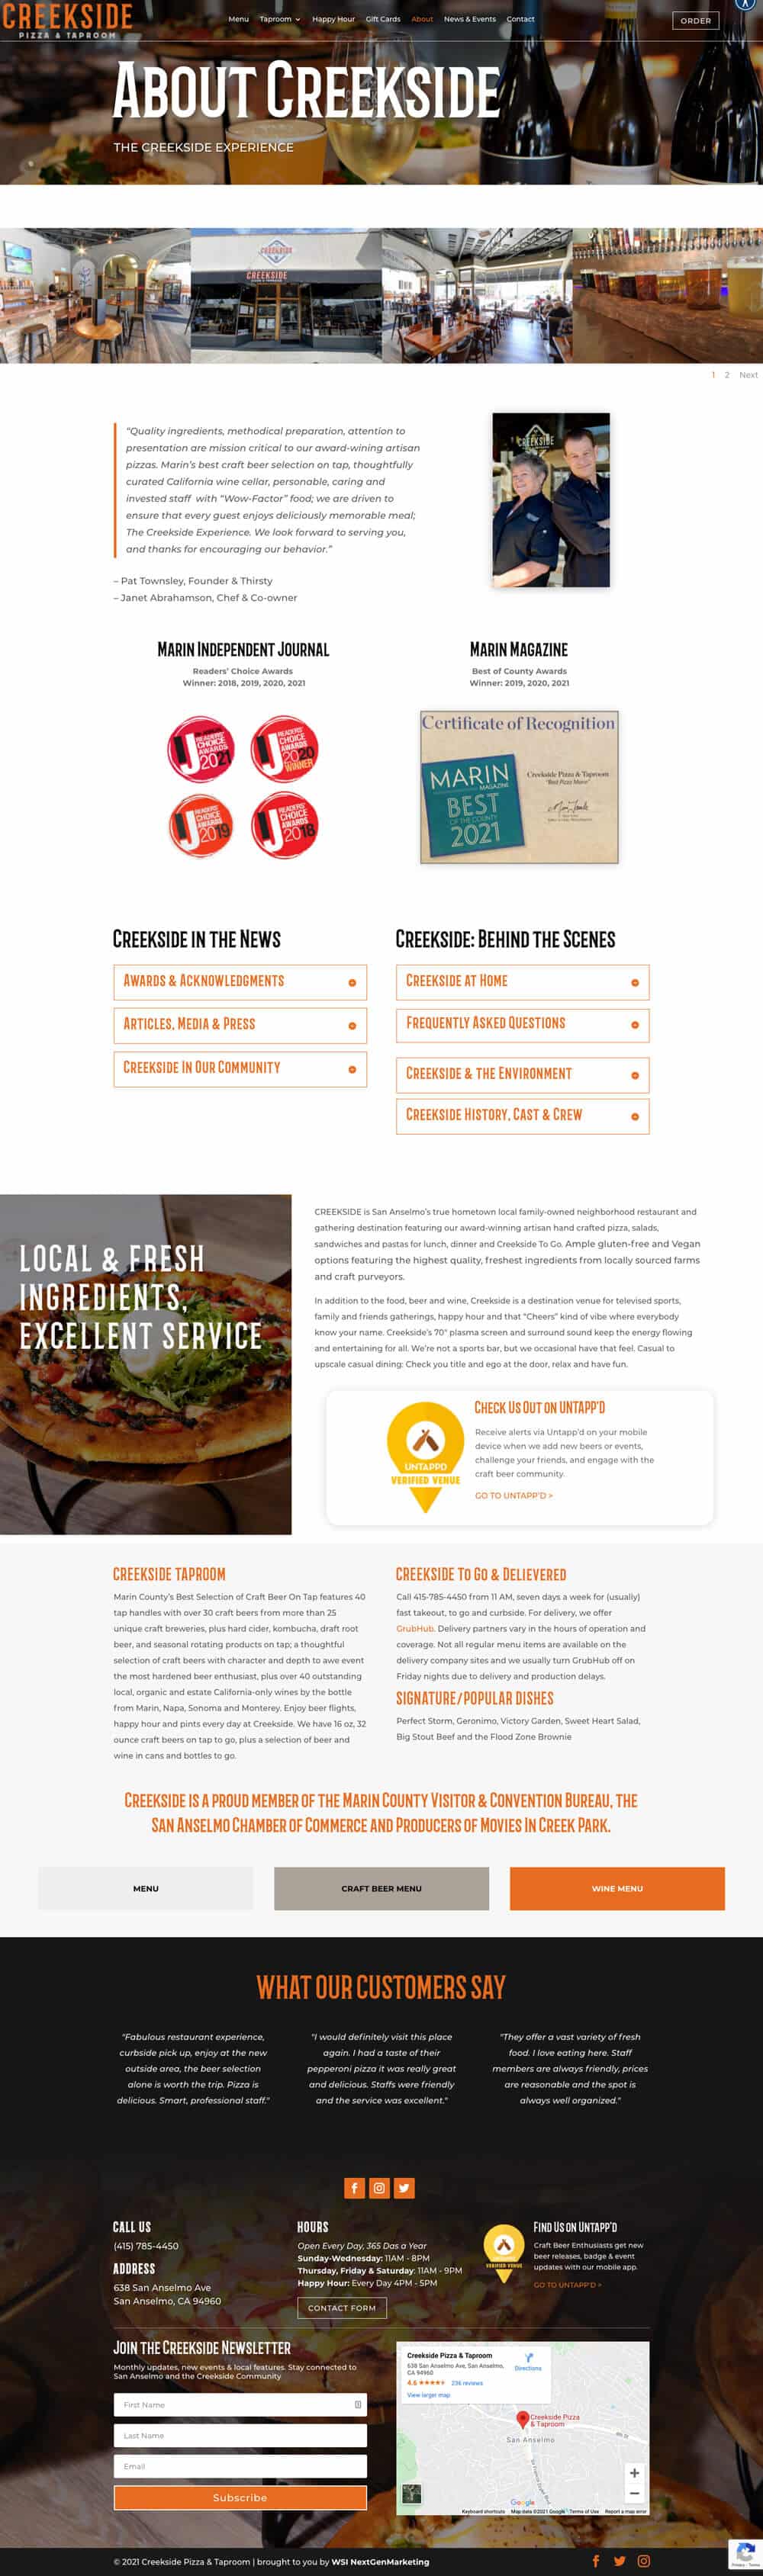 restaurant-web-design-creekside-about